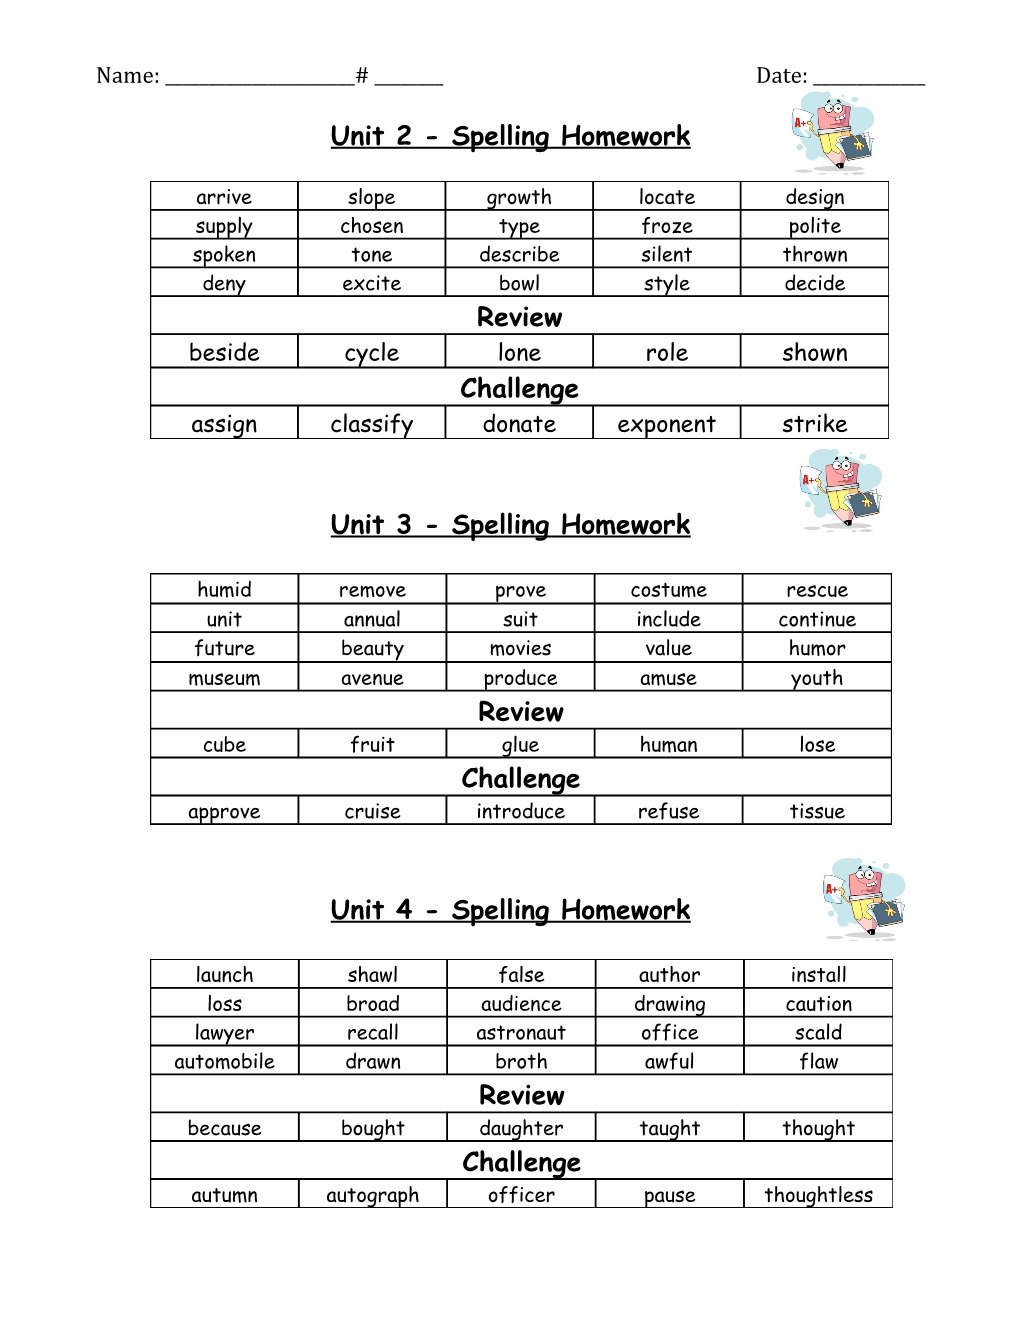 Unit 2 - Spelling Homework